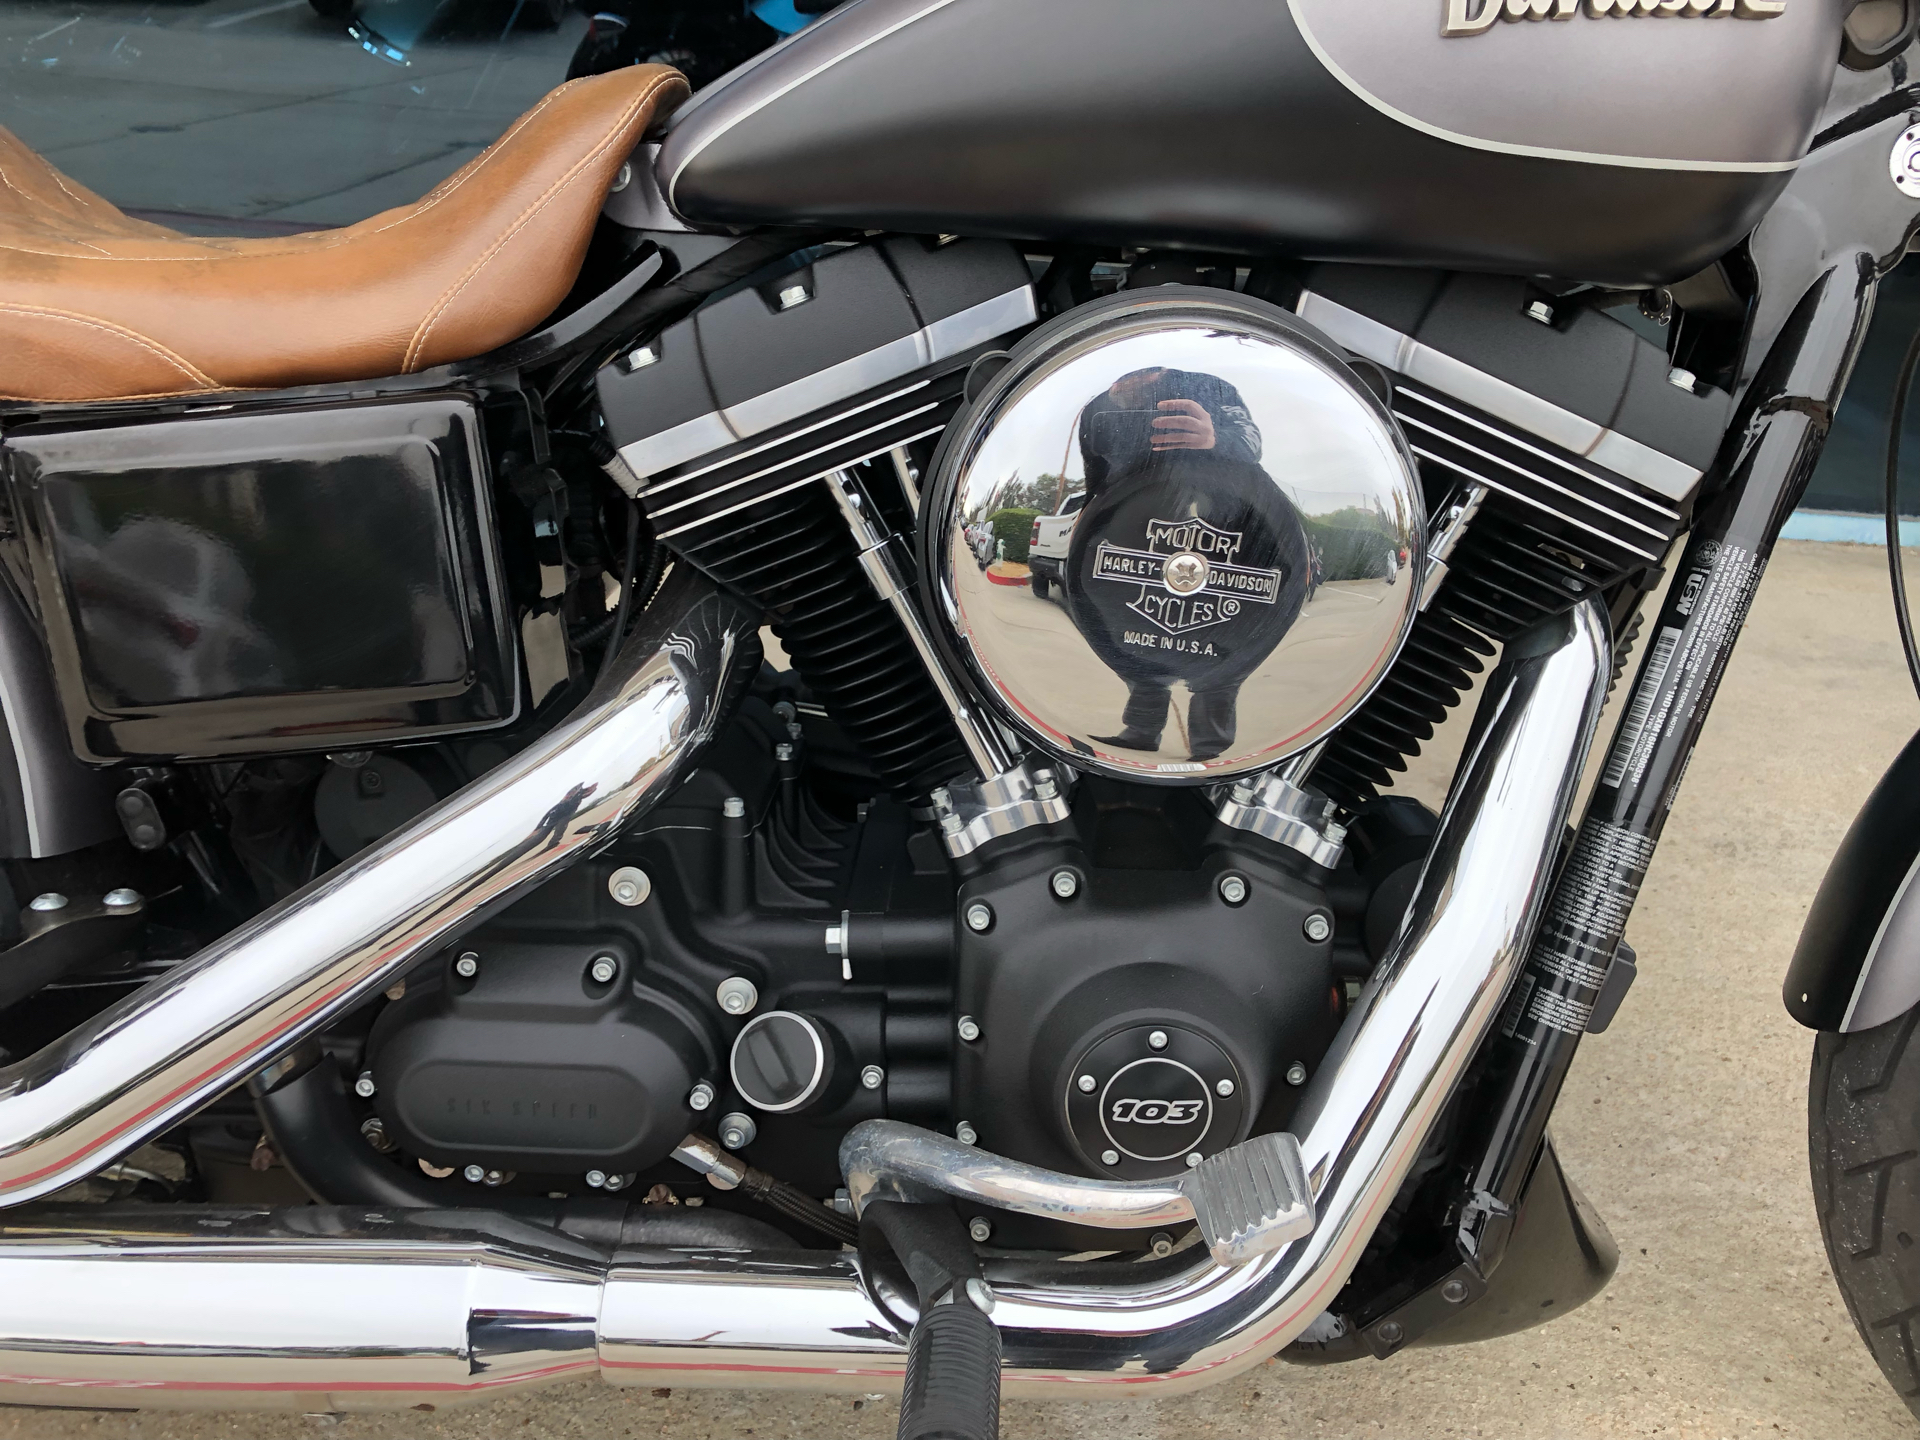 2017 Harley-Davidson Street Bob® in Temecula, California - Photo 5